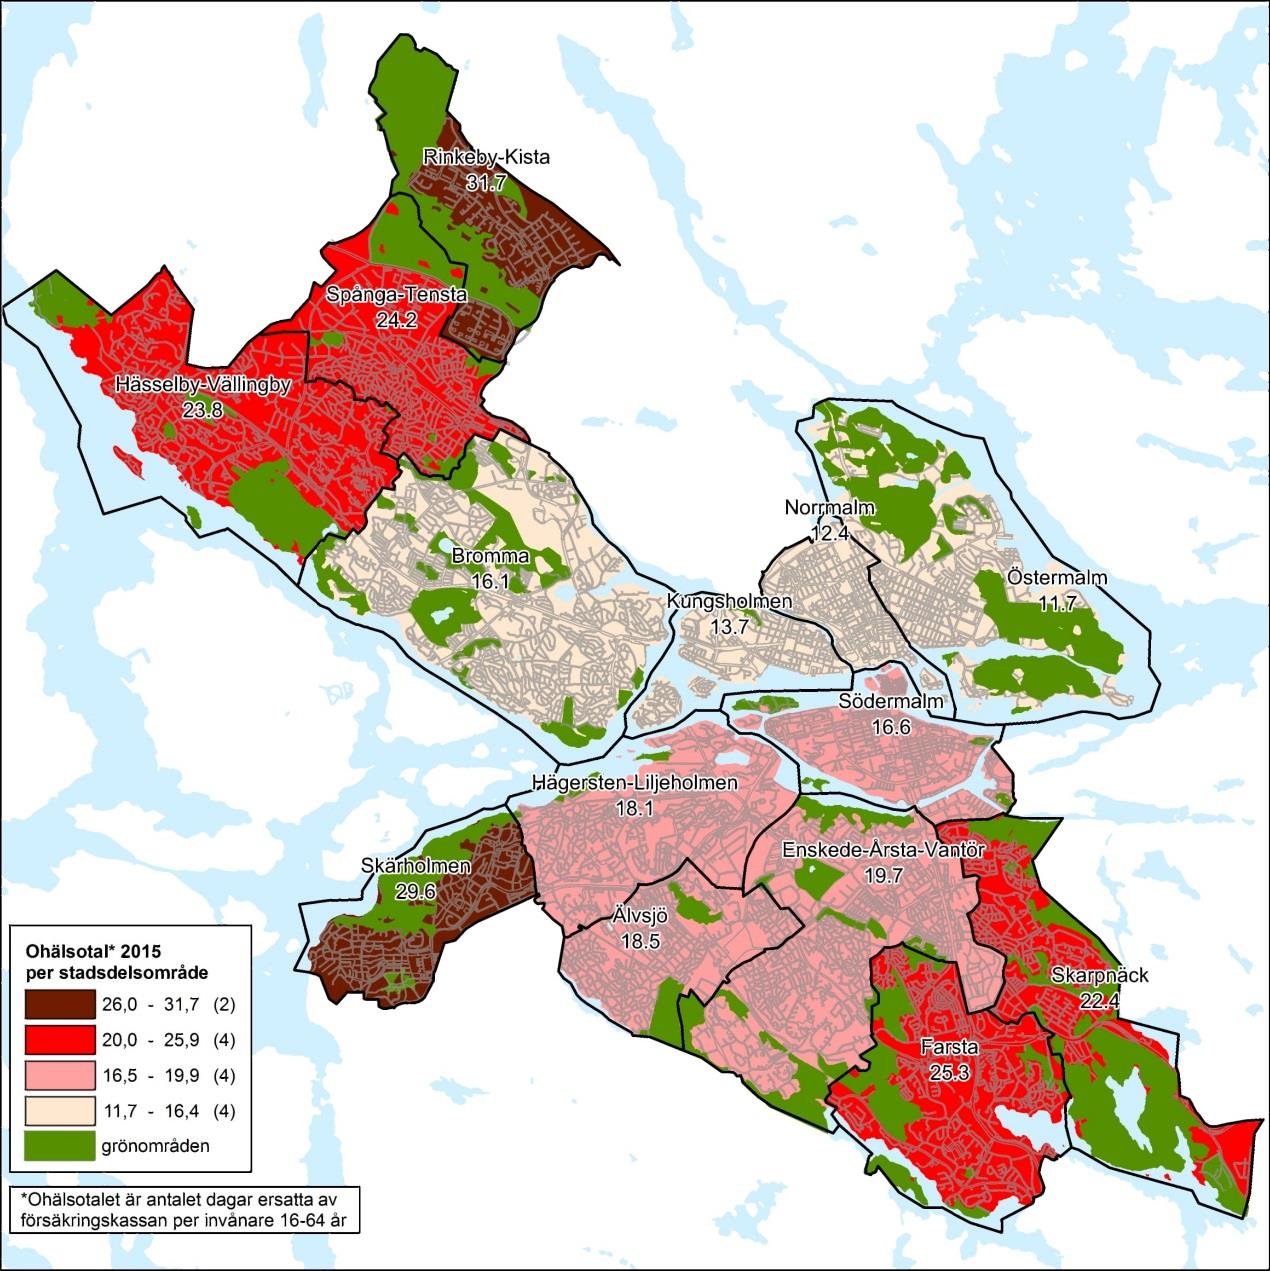 Figur 17, visar en karta över ohälsotalet i stadens stadsdelsområden.